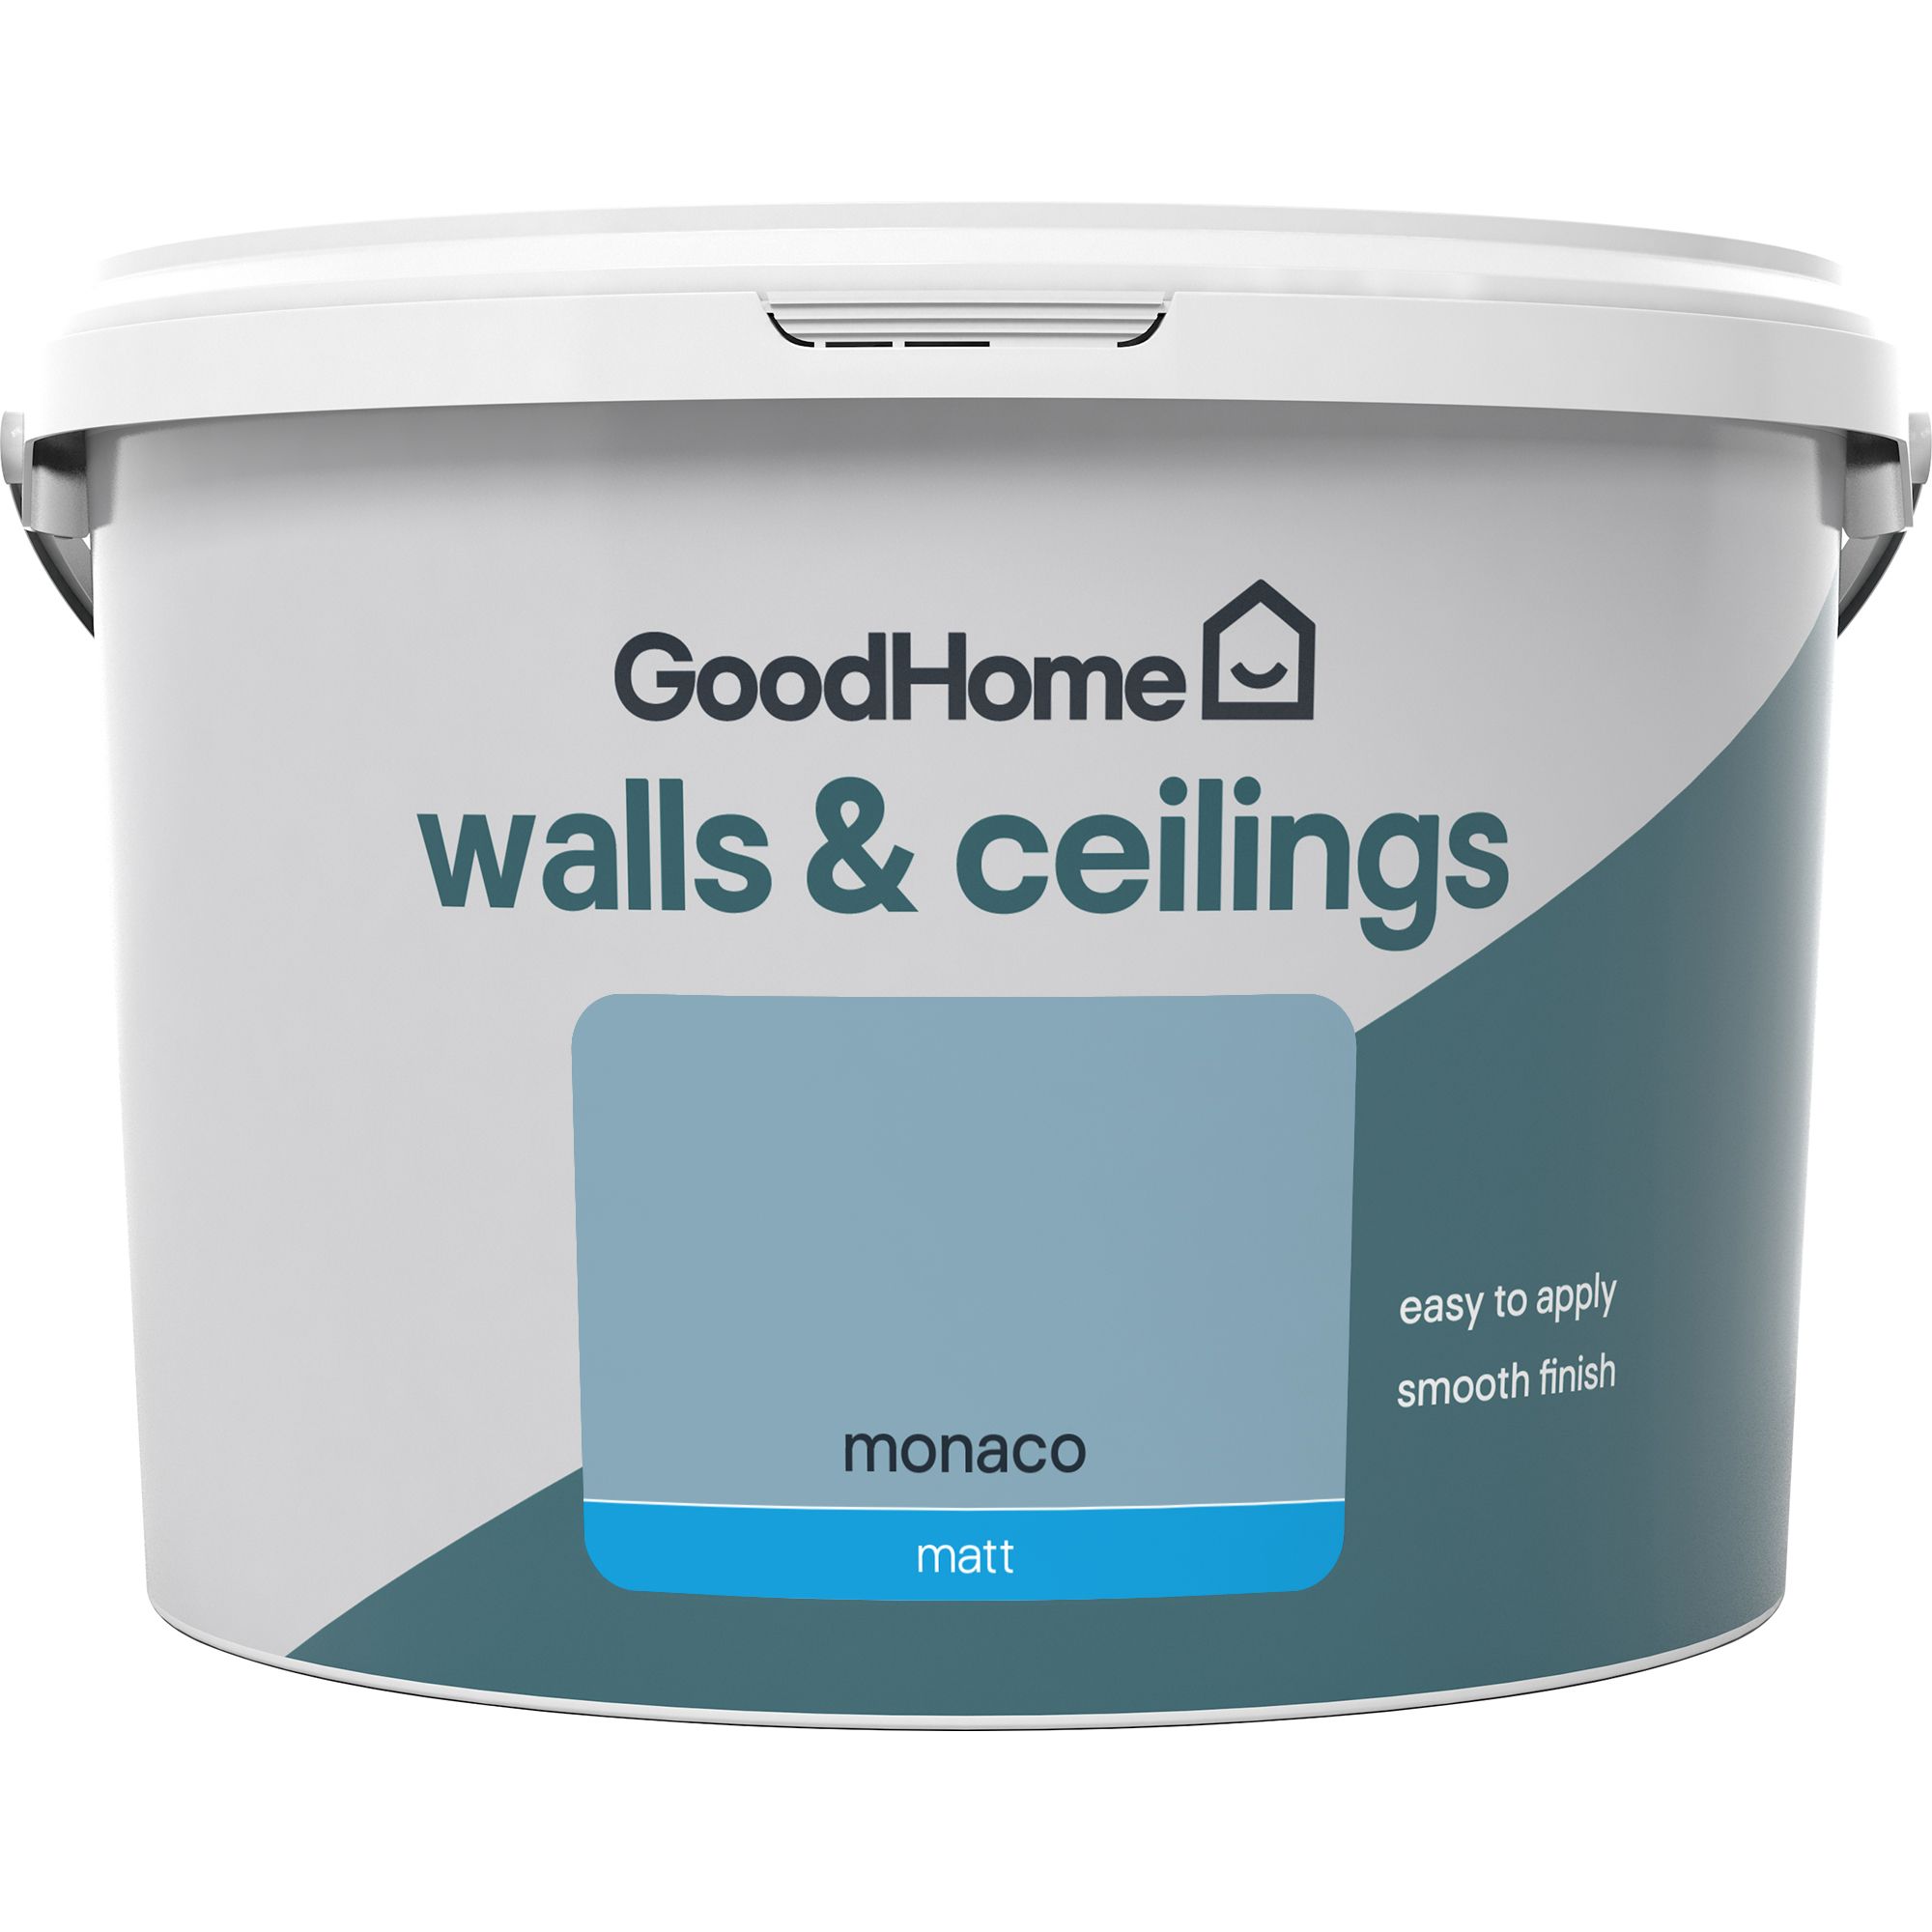 GoodHome Walls & ceilings Monaco Matt Emulsion paint, 2.5L